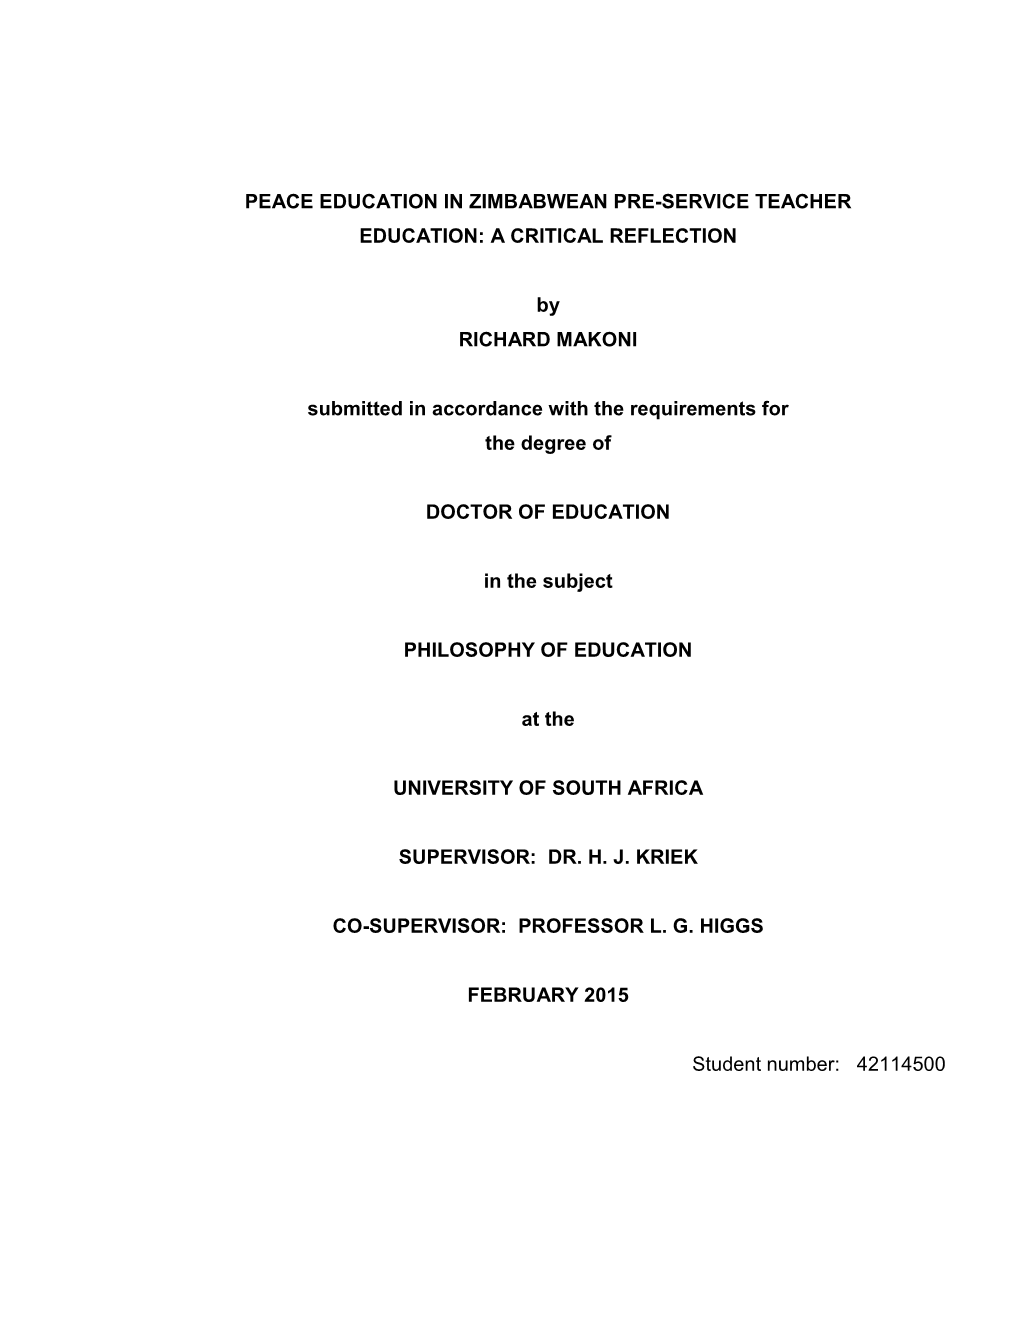 Peace Education in Zimbabwean Pre-Service Teacher Education: a Critical Reflection